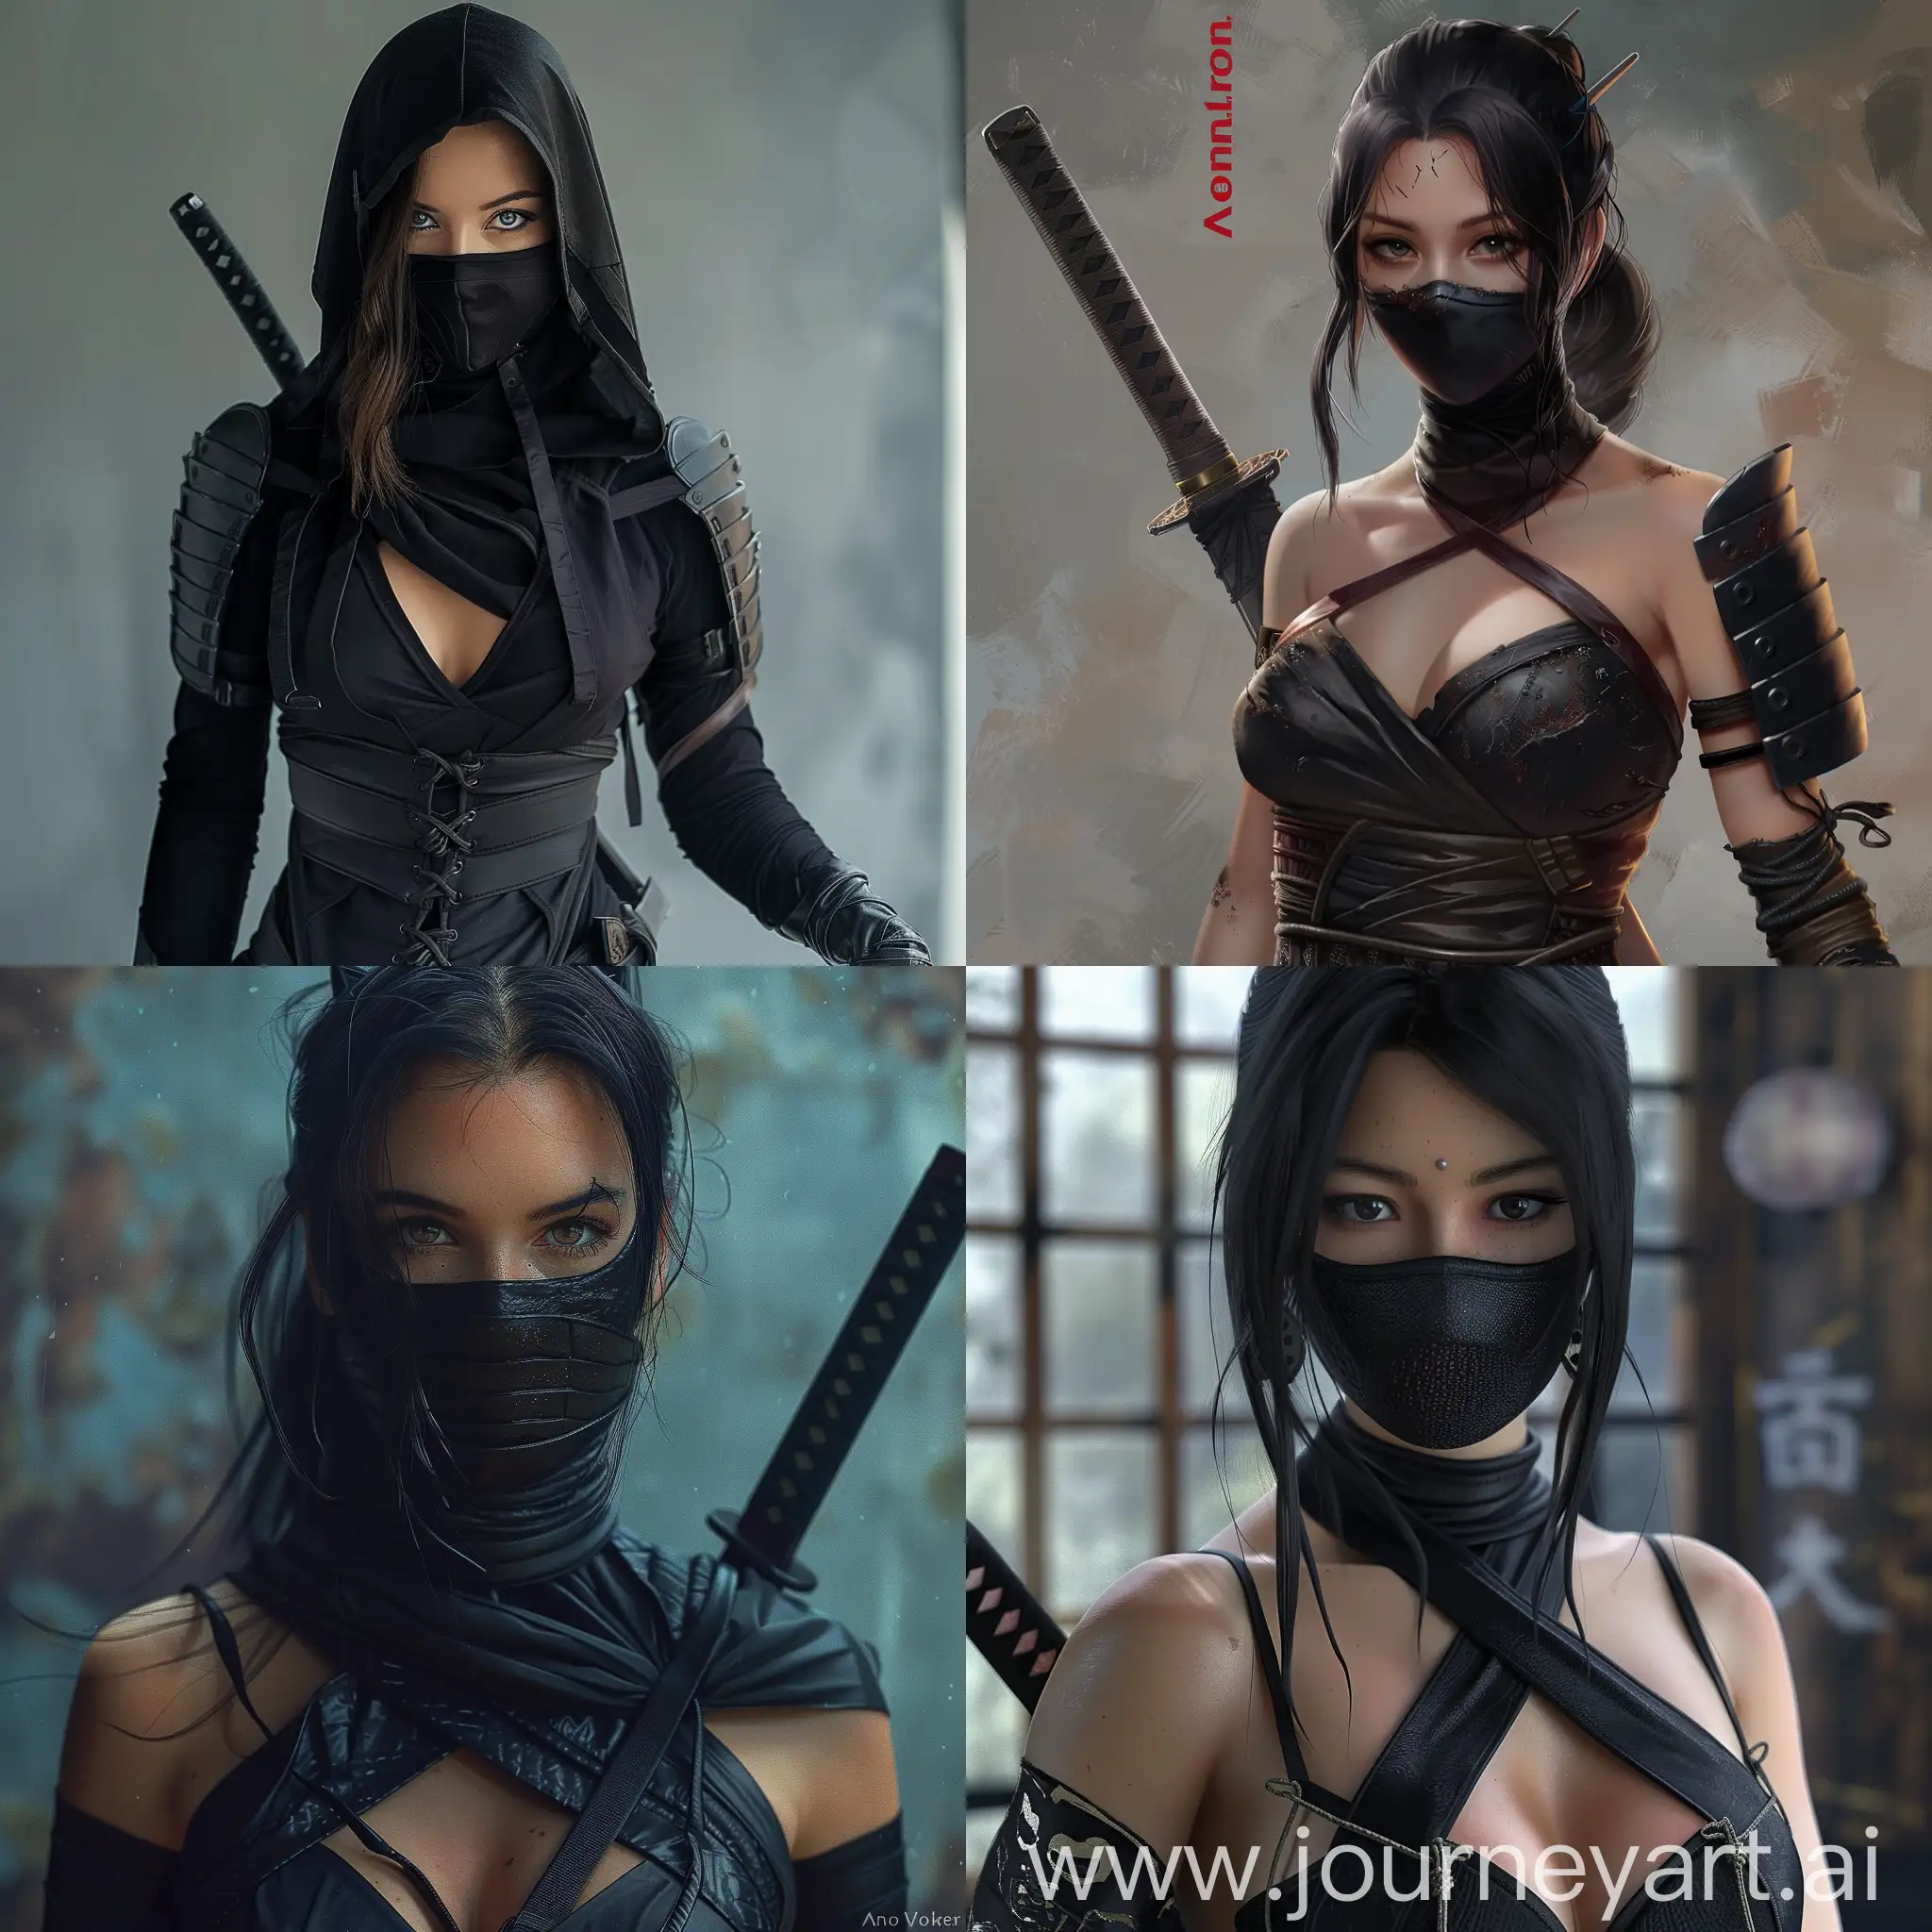 beautiful ninja,assasin woman realistic nova write

